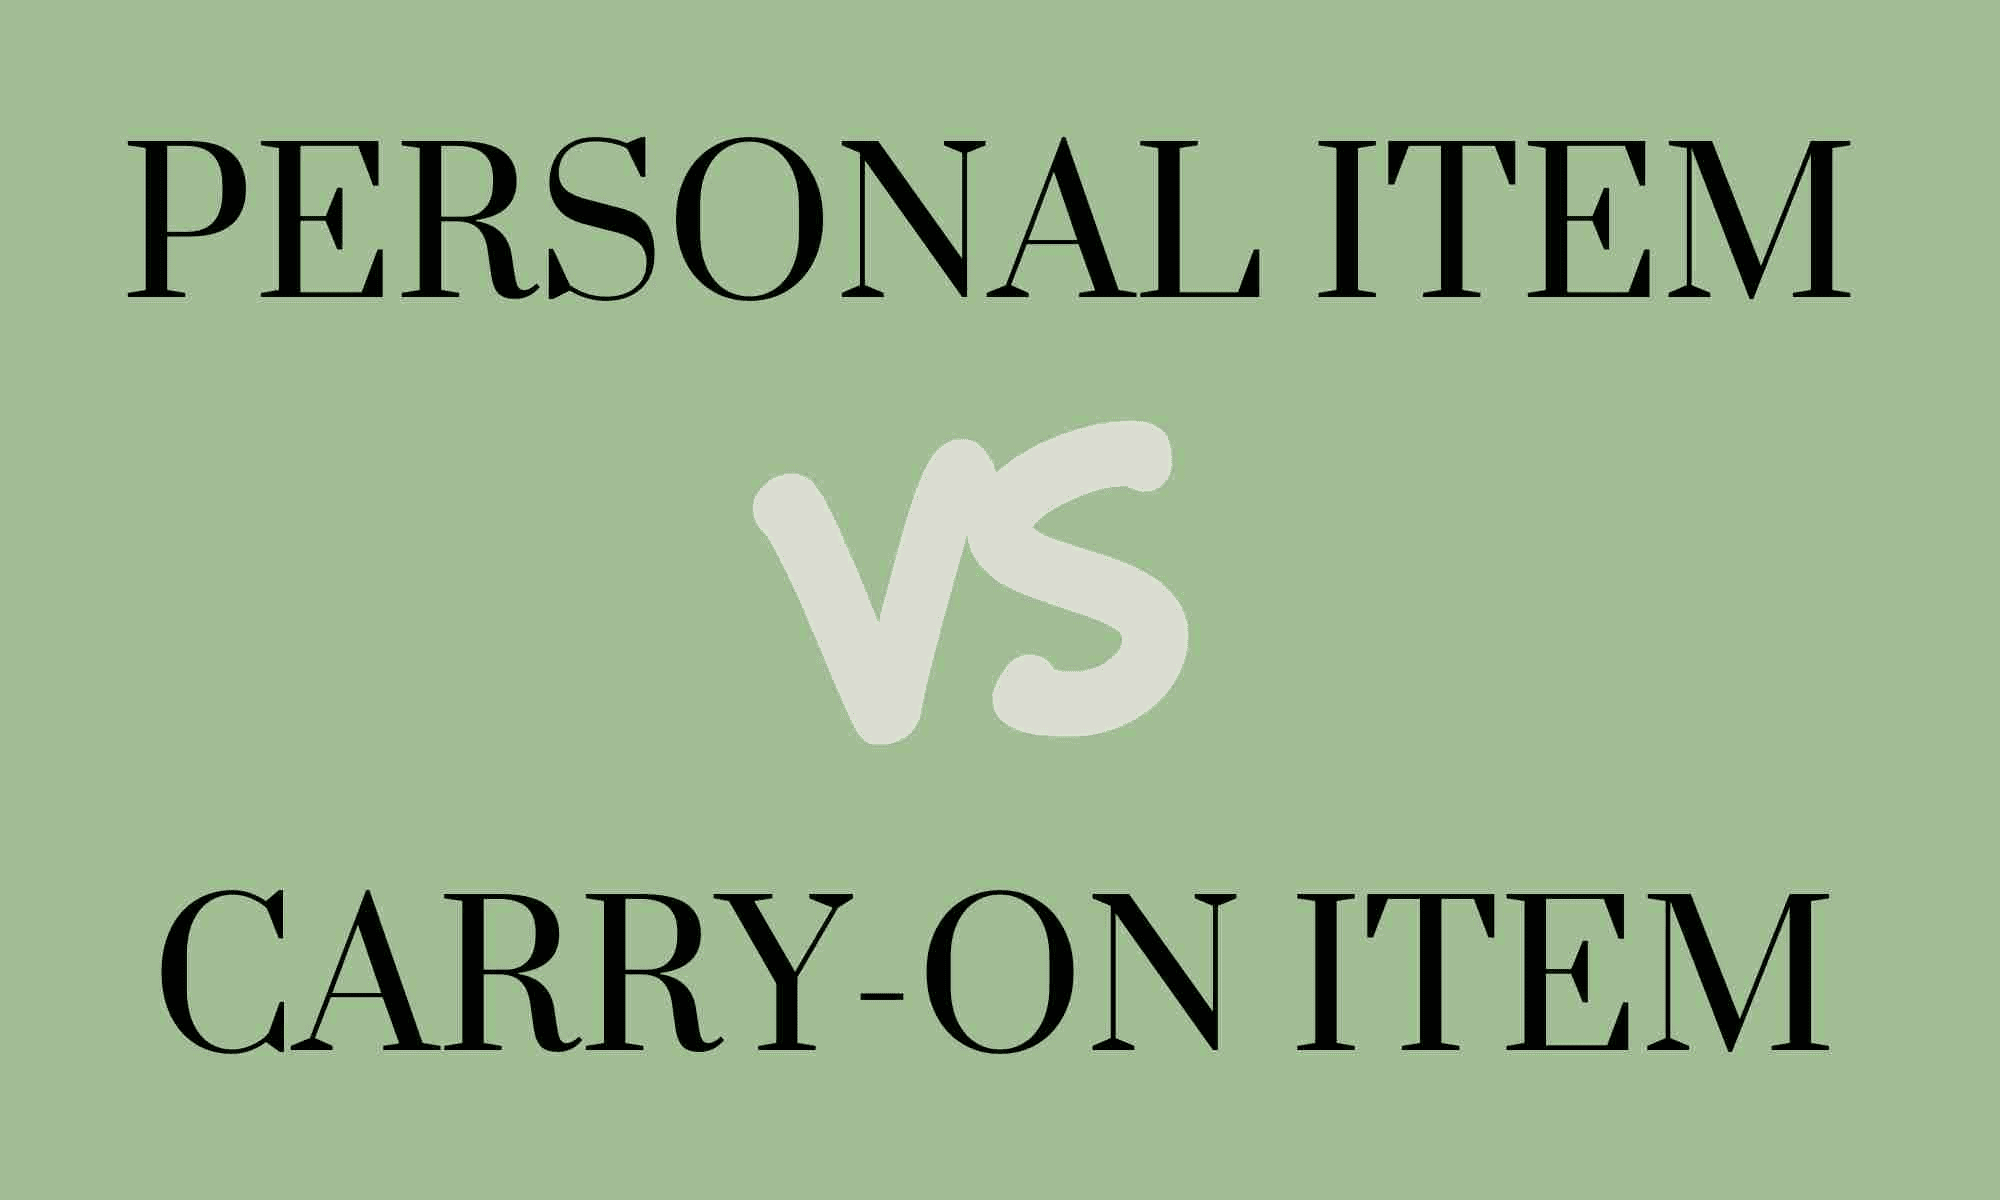 personal item versus carry-on item graphic